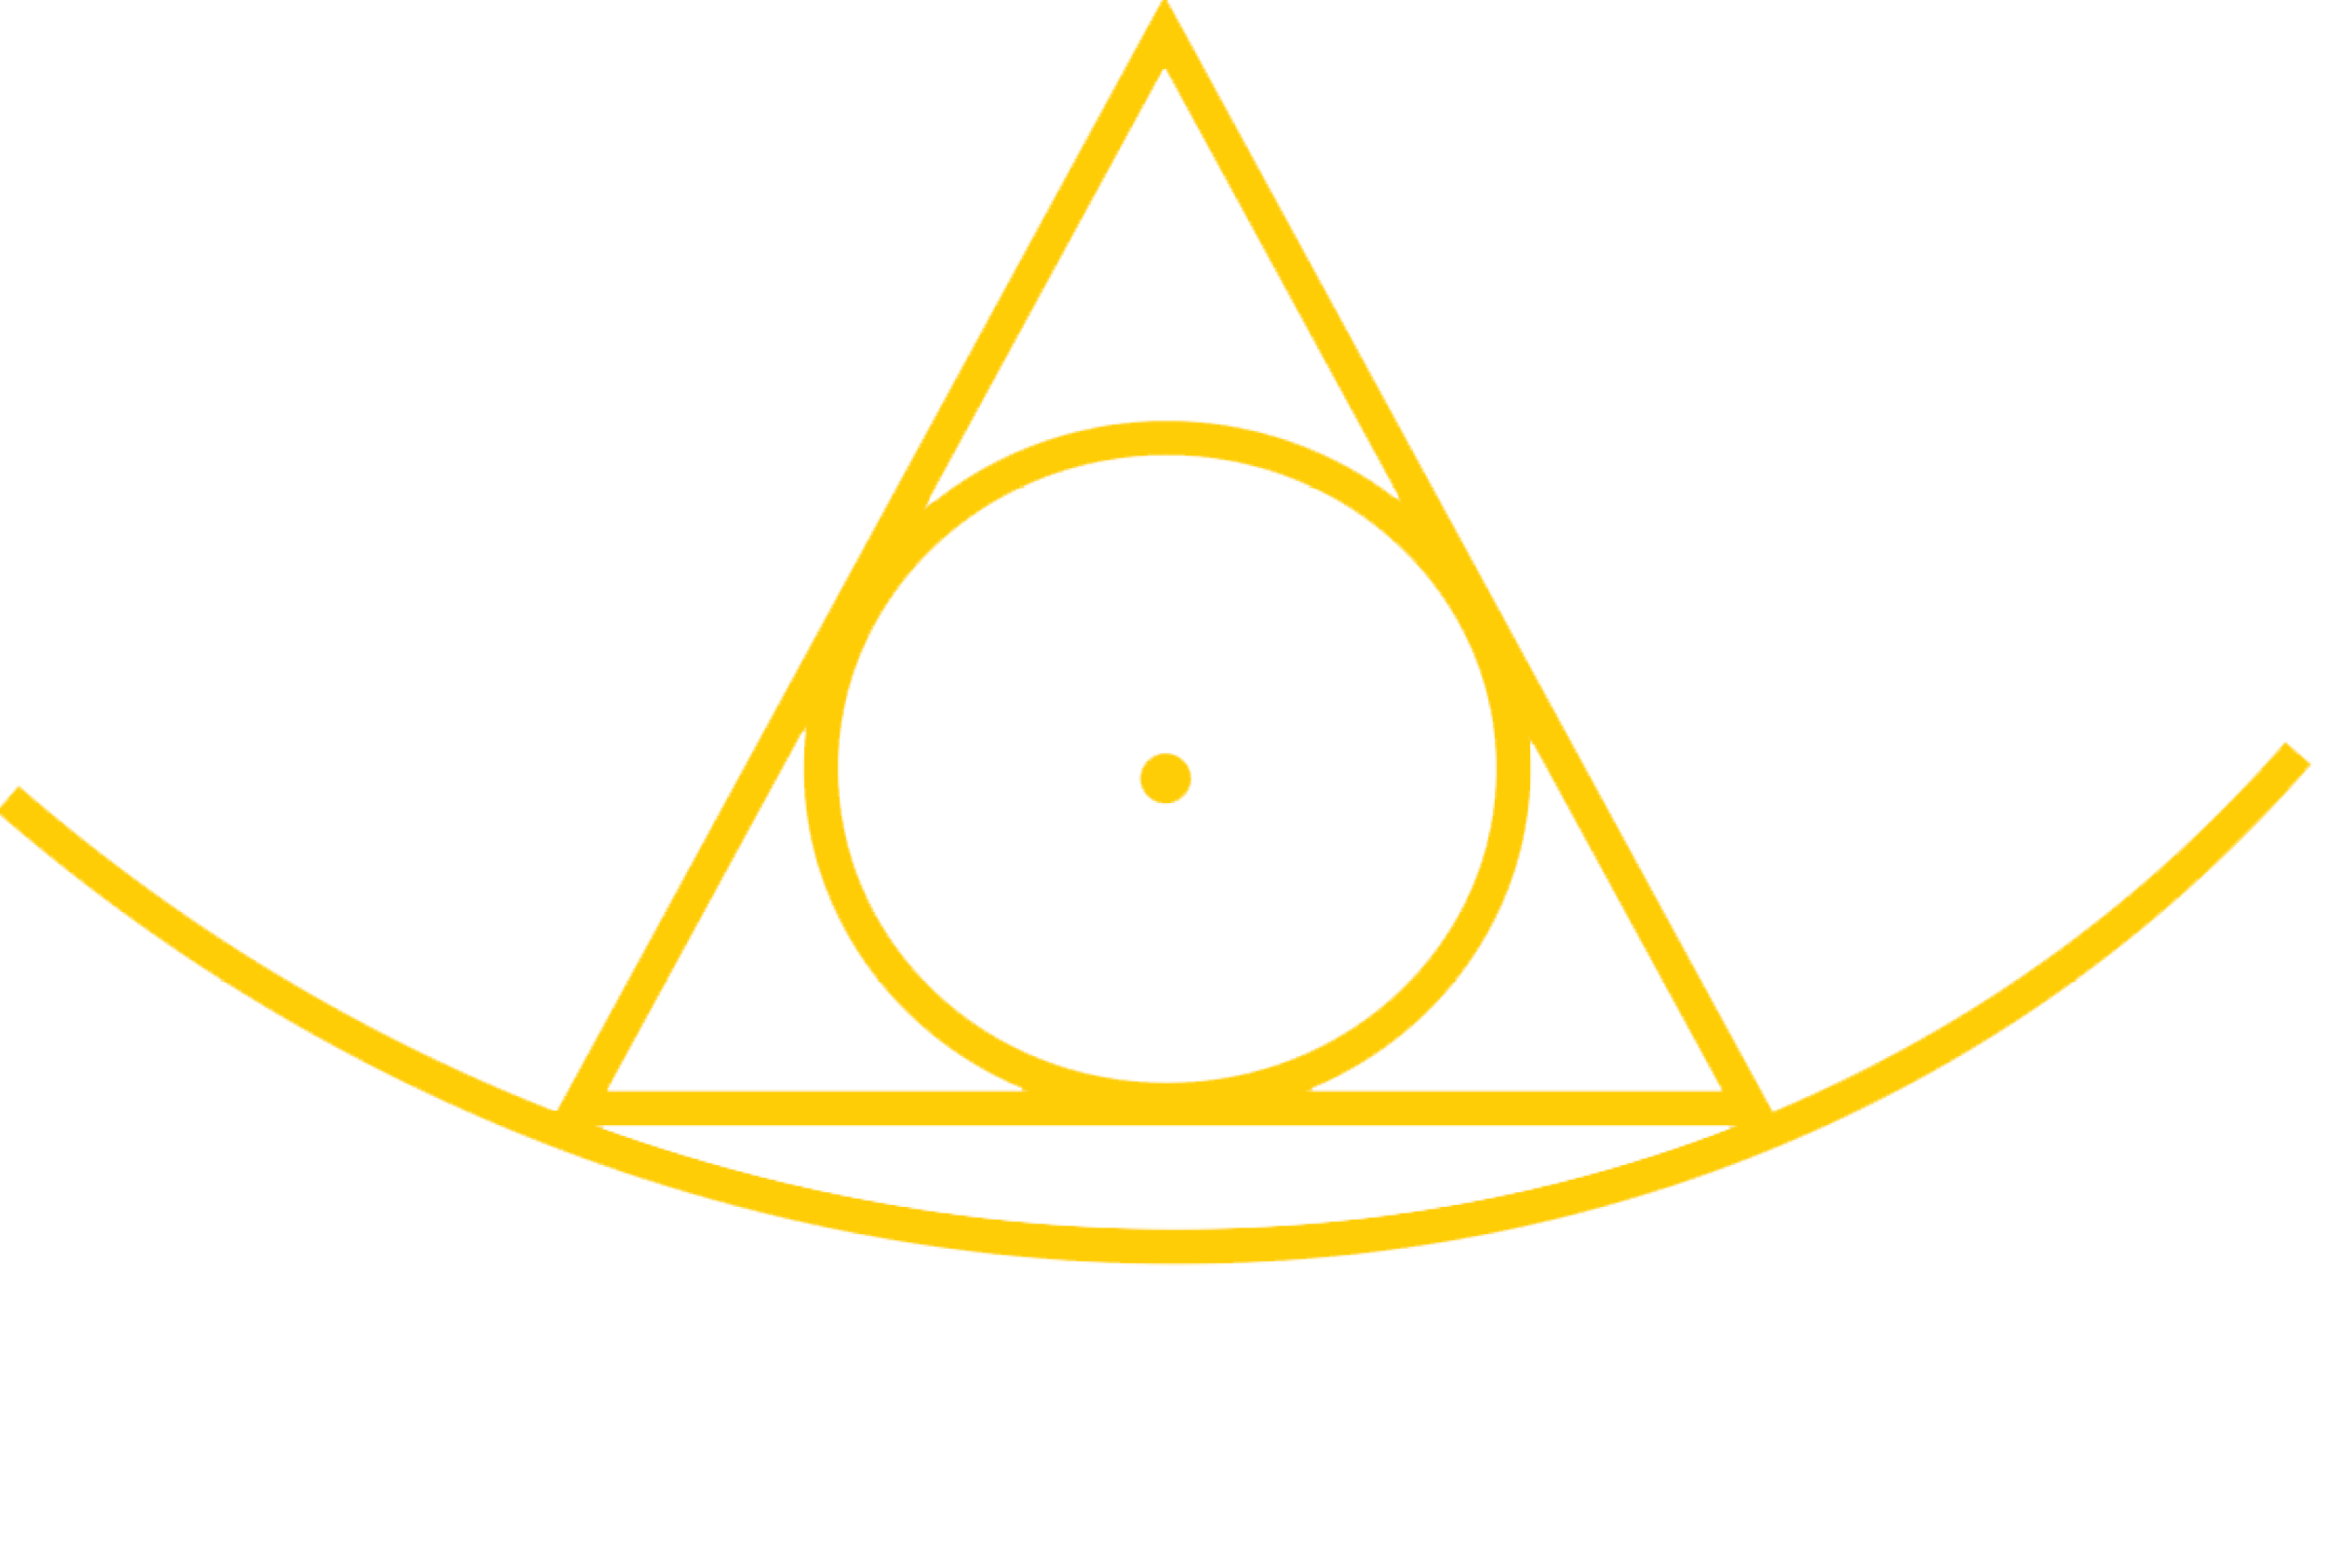 CREATIVE MEDITATION